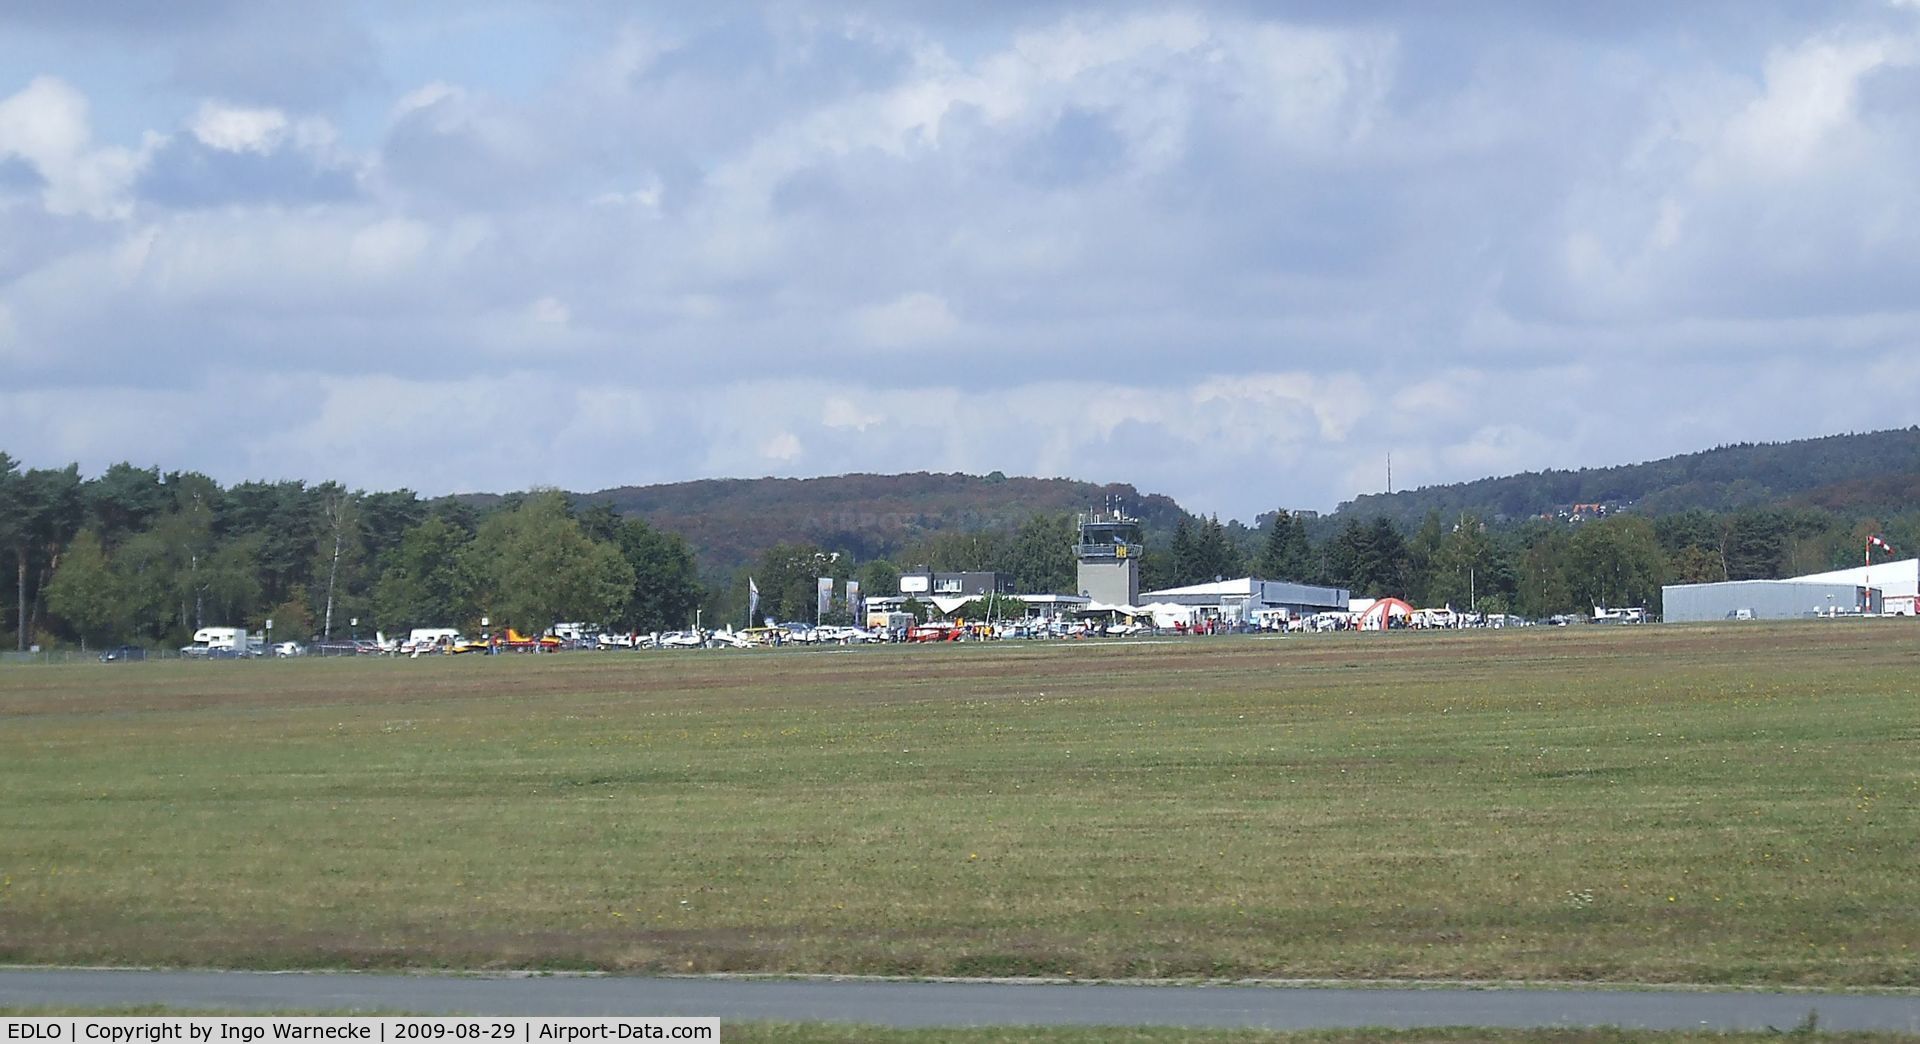 EDLO Airport - Oerlinghausen buildings seen from across the airfield